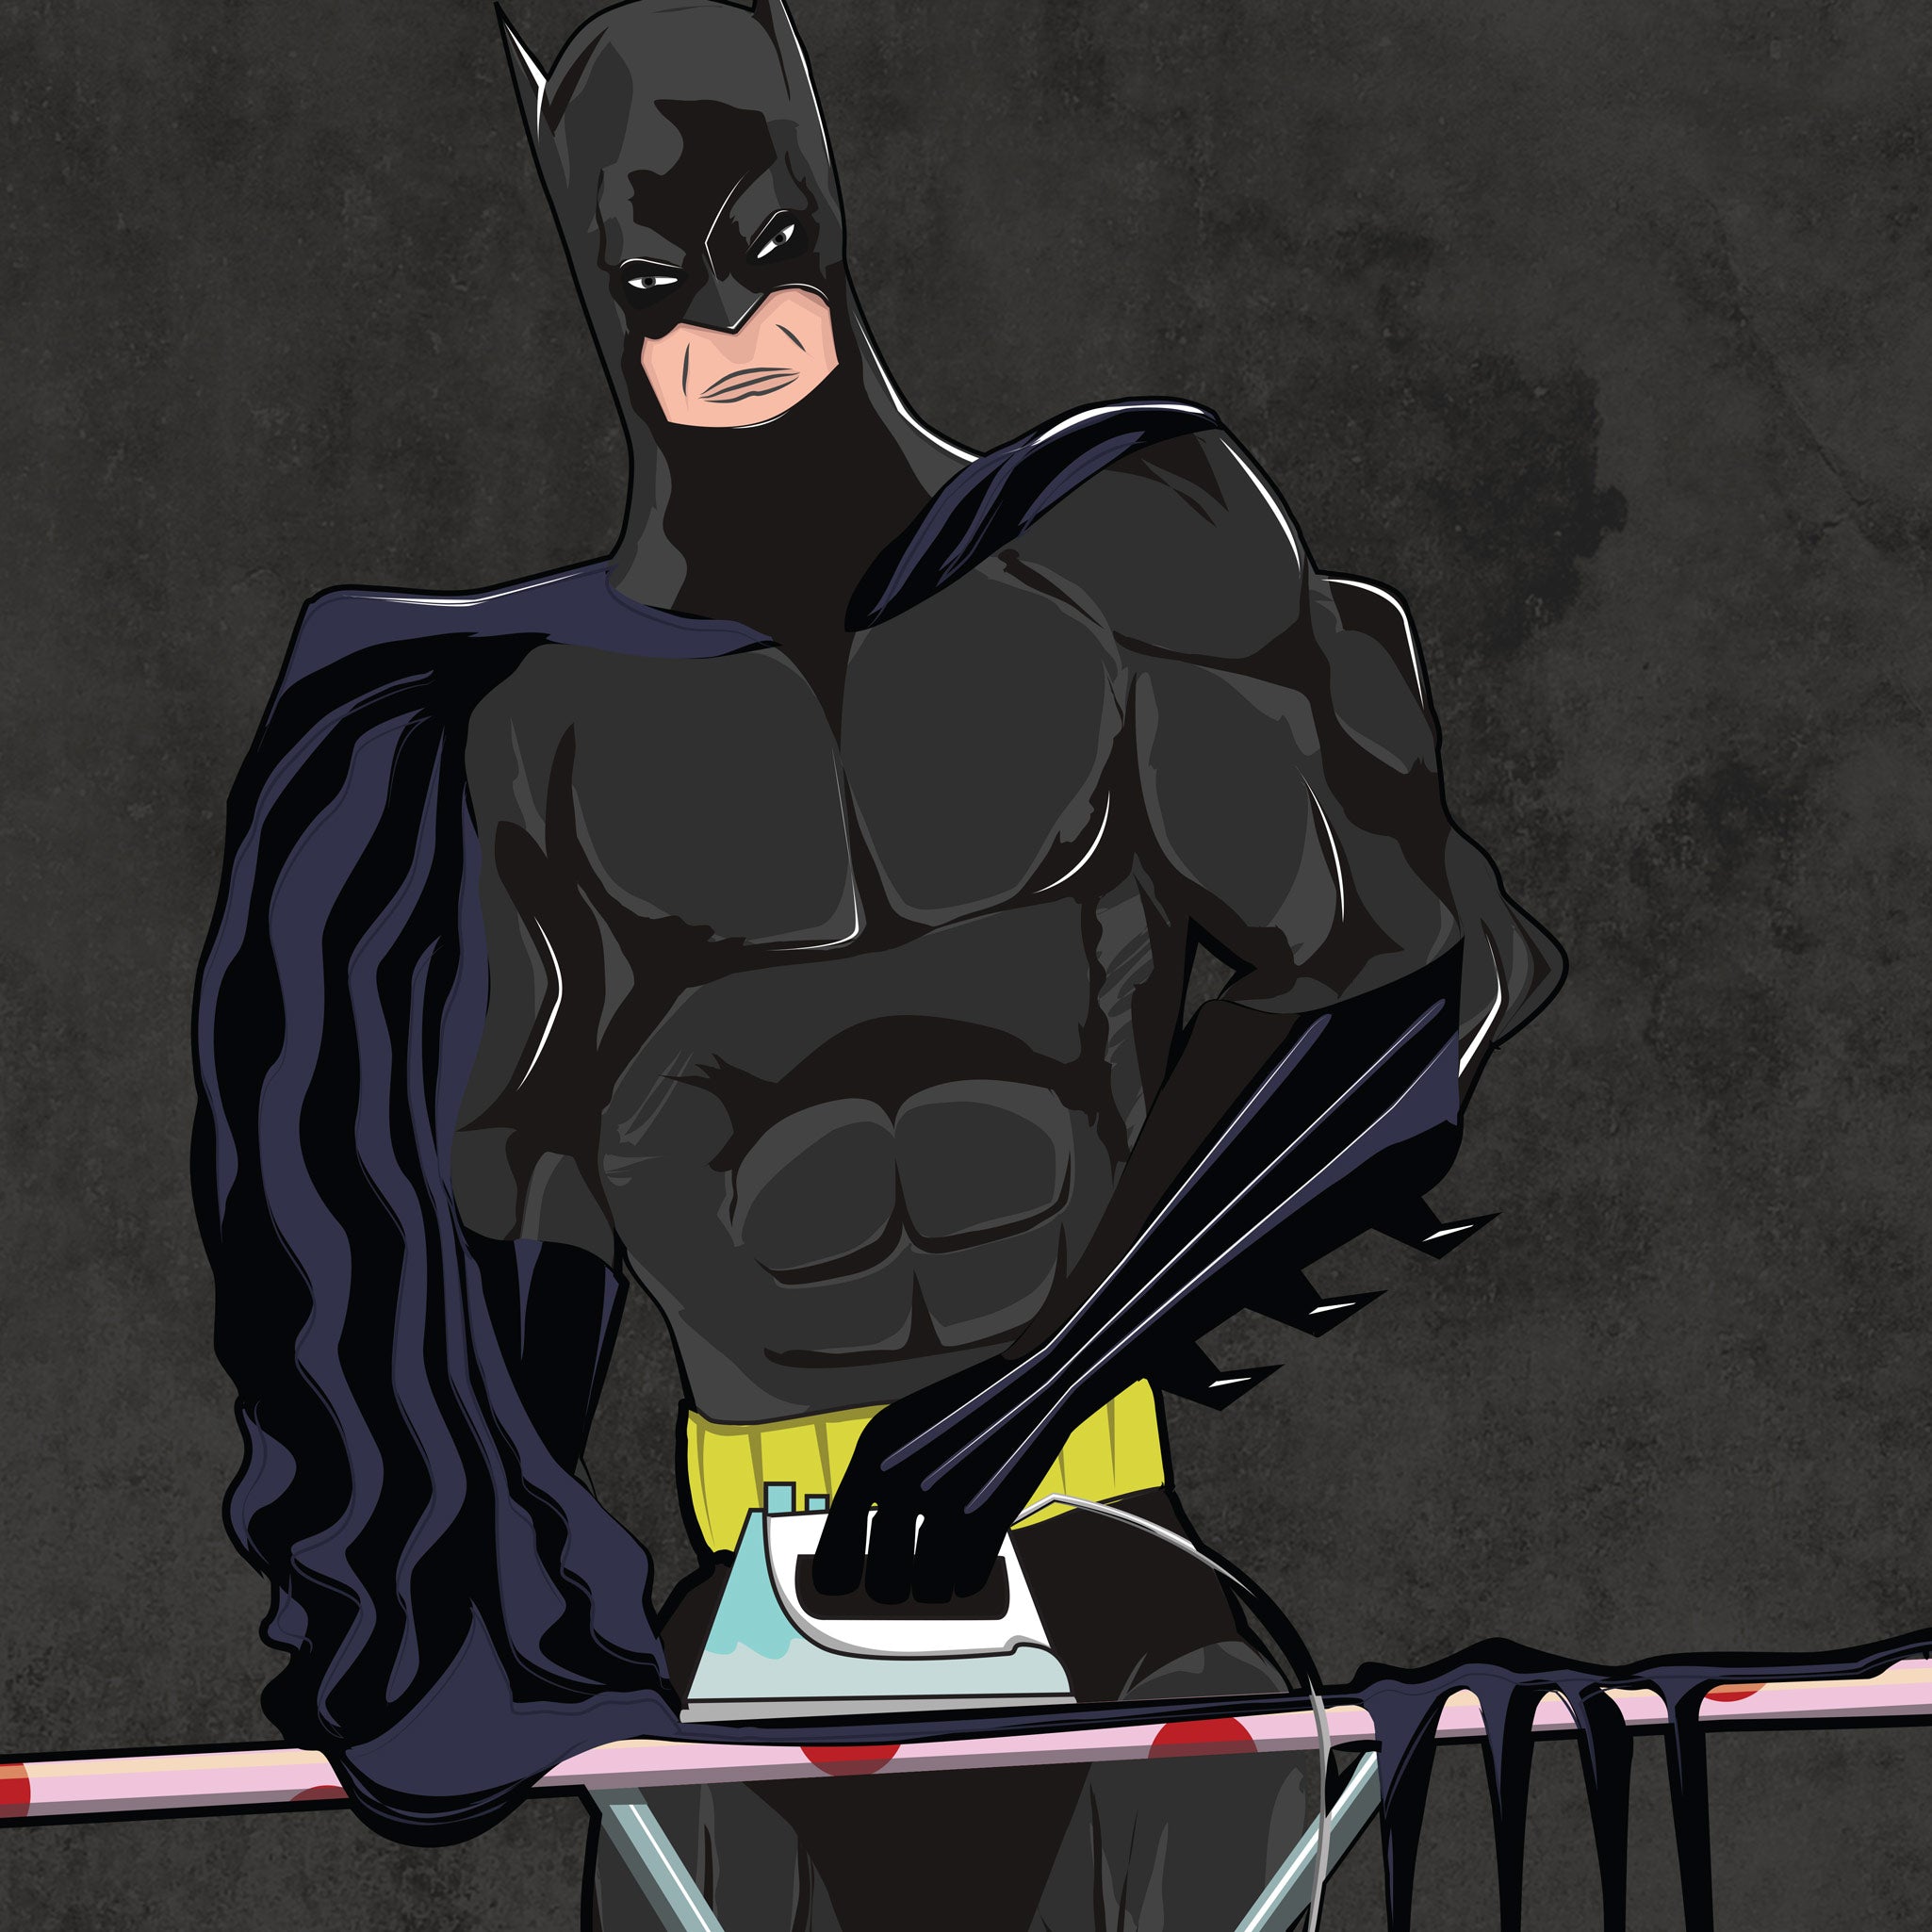 Batman doing his Laundry Superhero Poster 